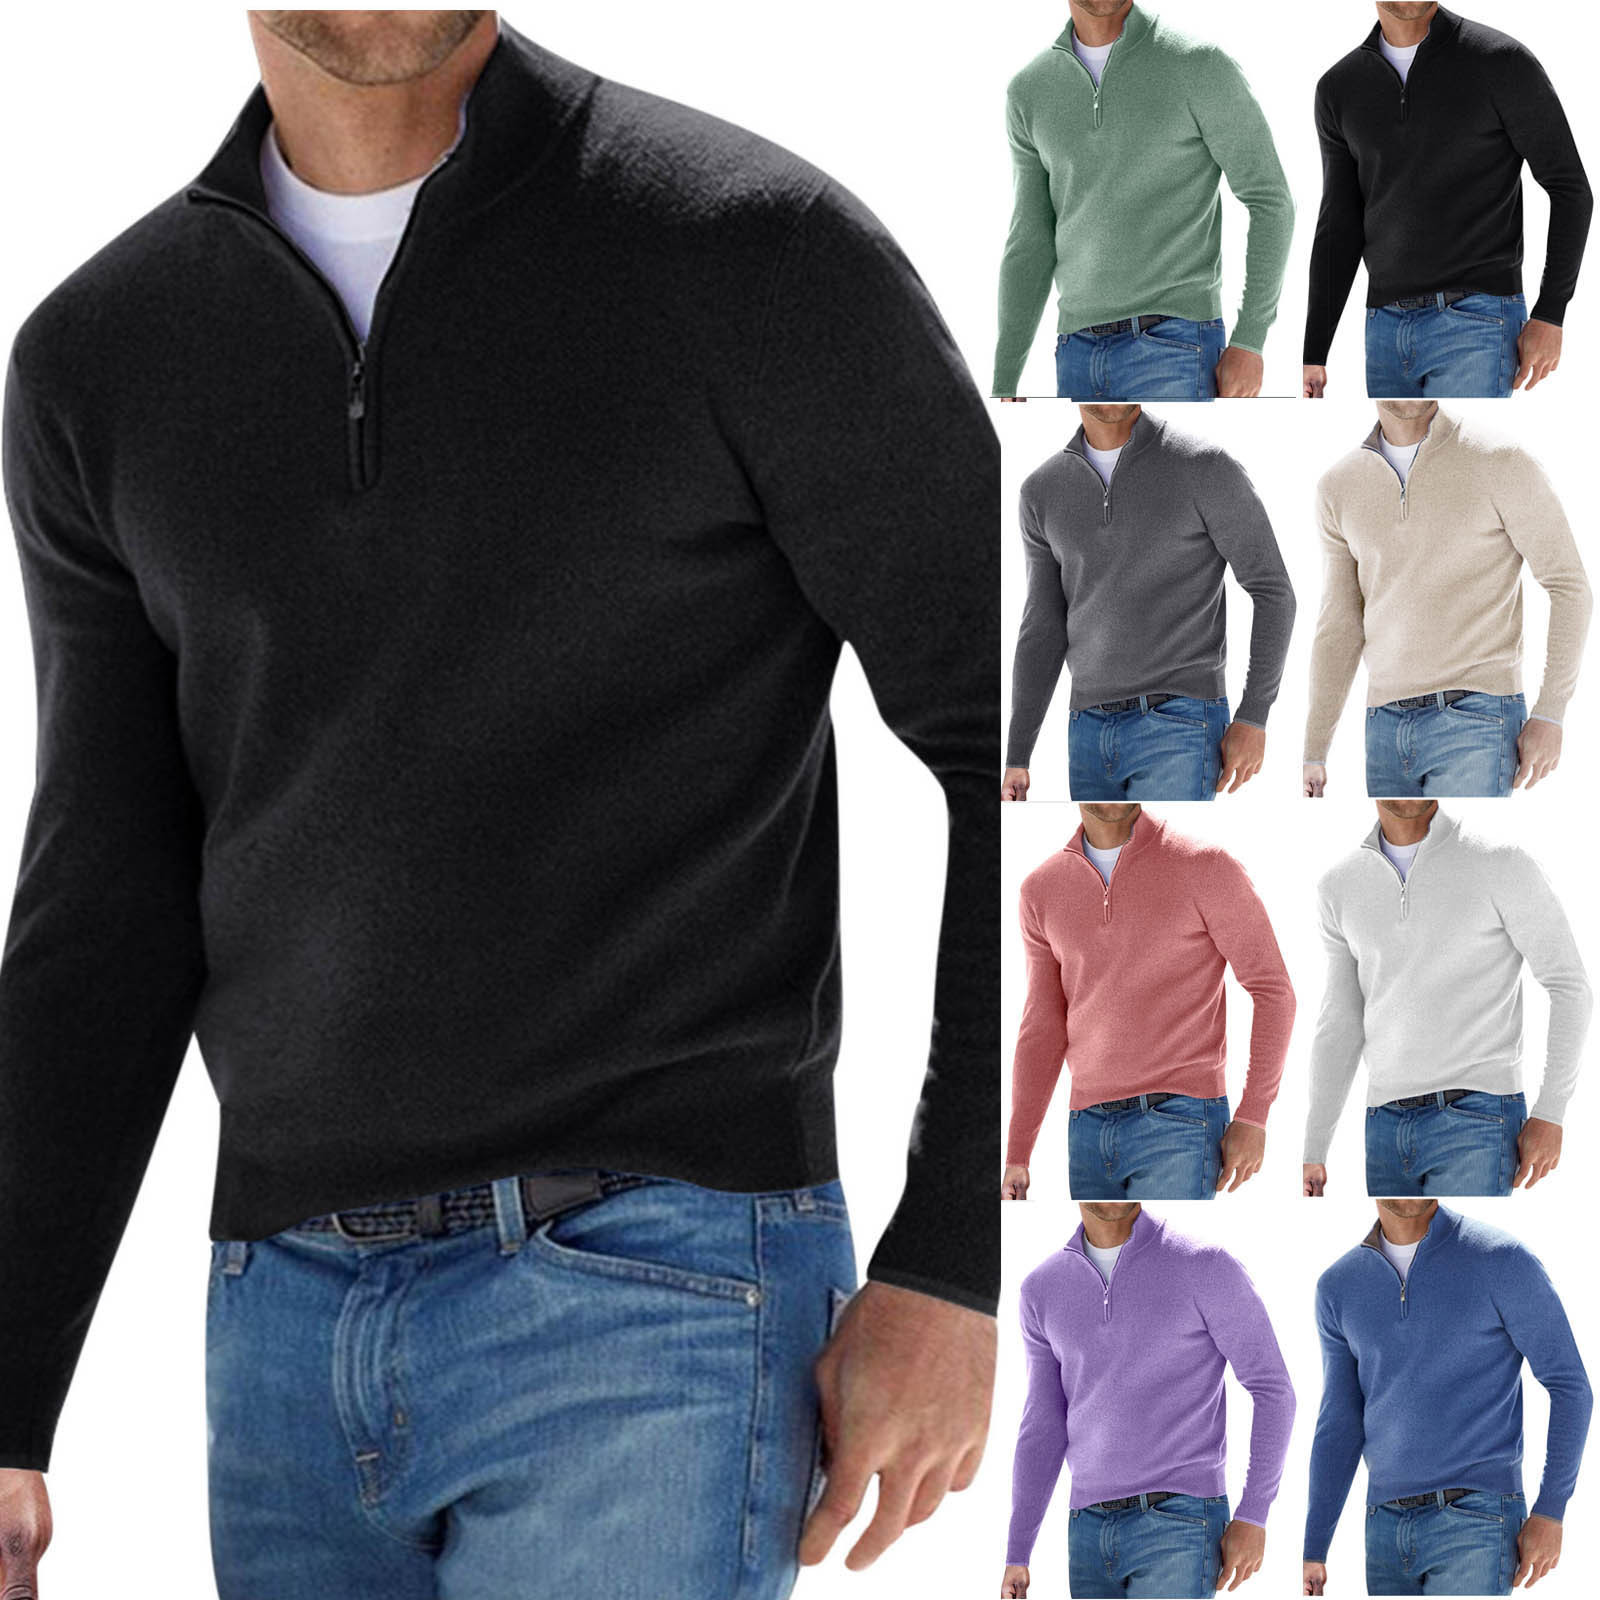 Utoimkio Men's Quarter Zip Sweaters Slim Fit Lightweight Cotton Knitted ...